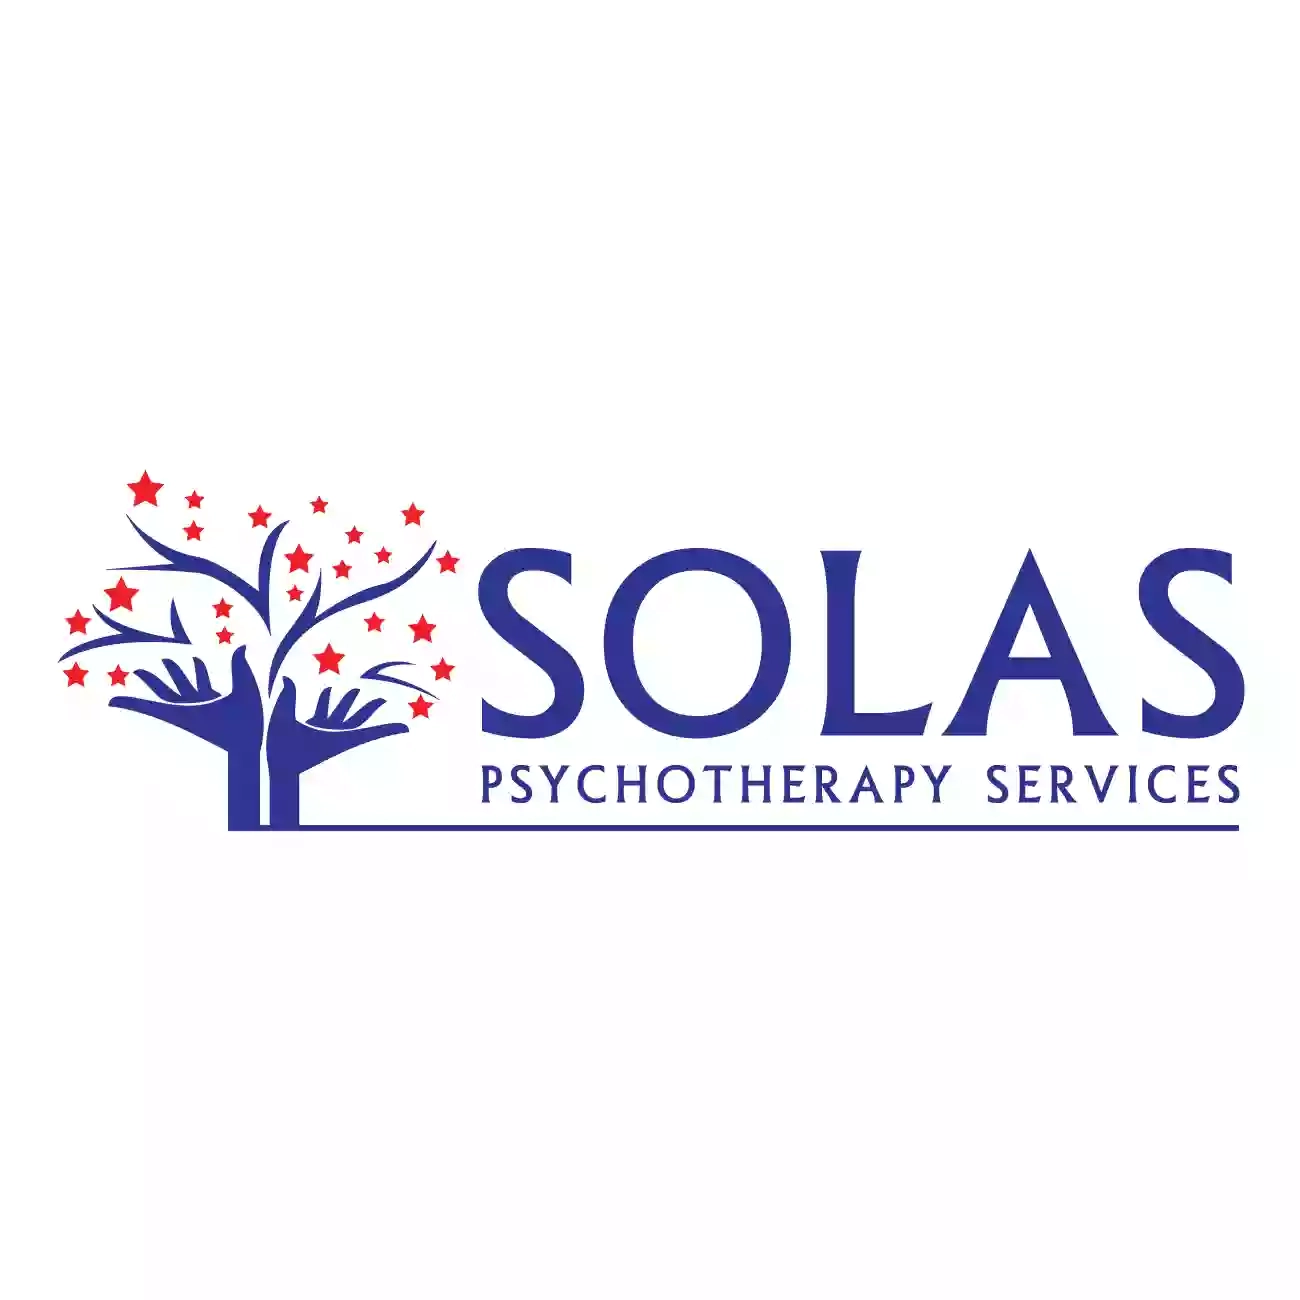 Solas Psychotherapy Services